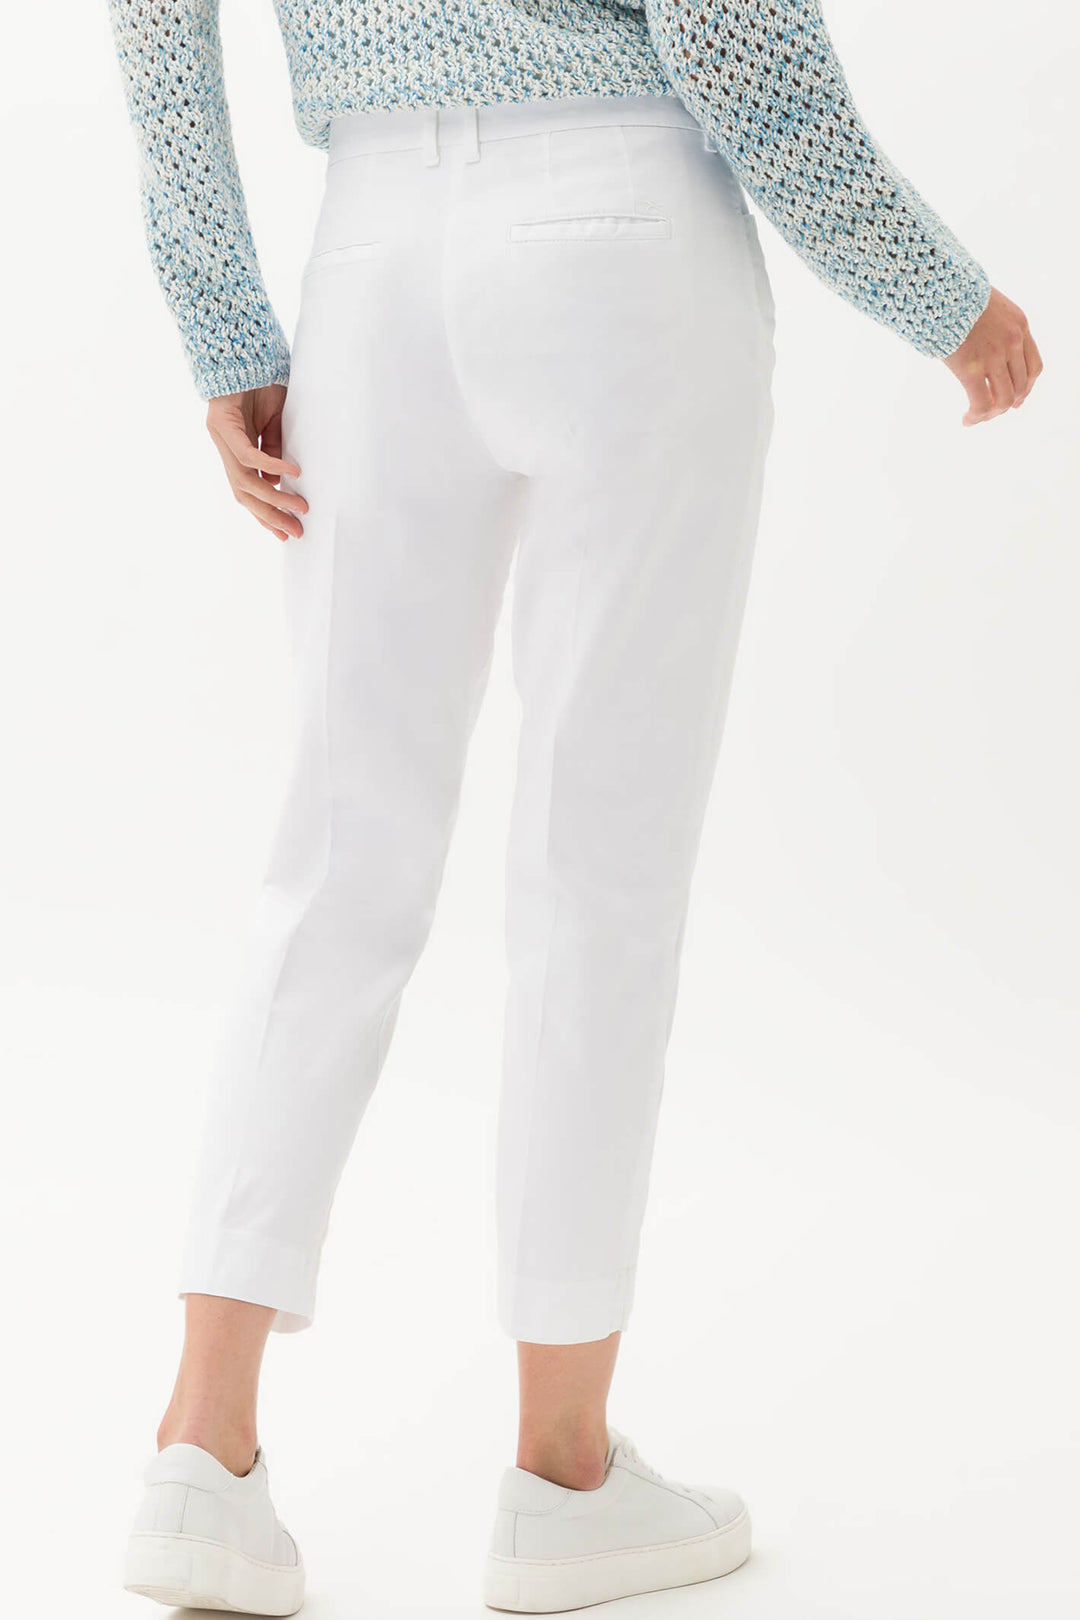 Brax Mara S 72-1458-99 White Trousers - Oloivia Grace Fashion